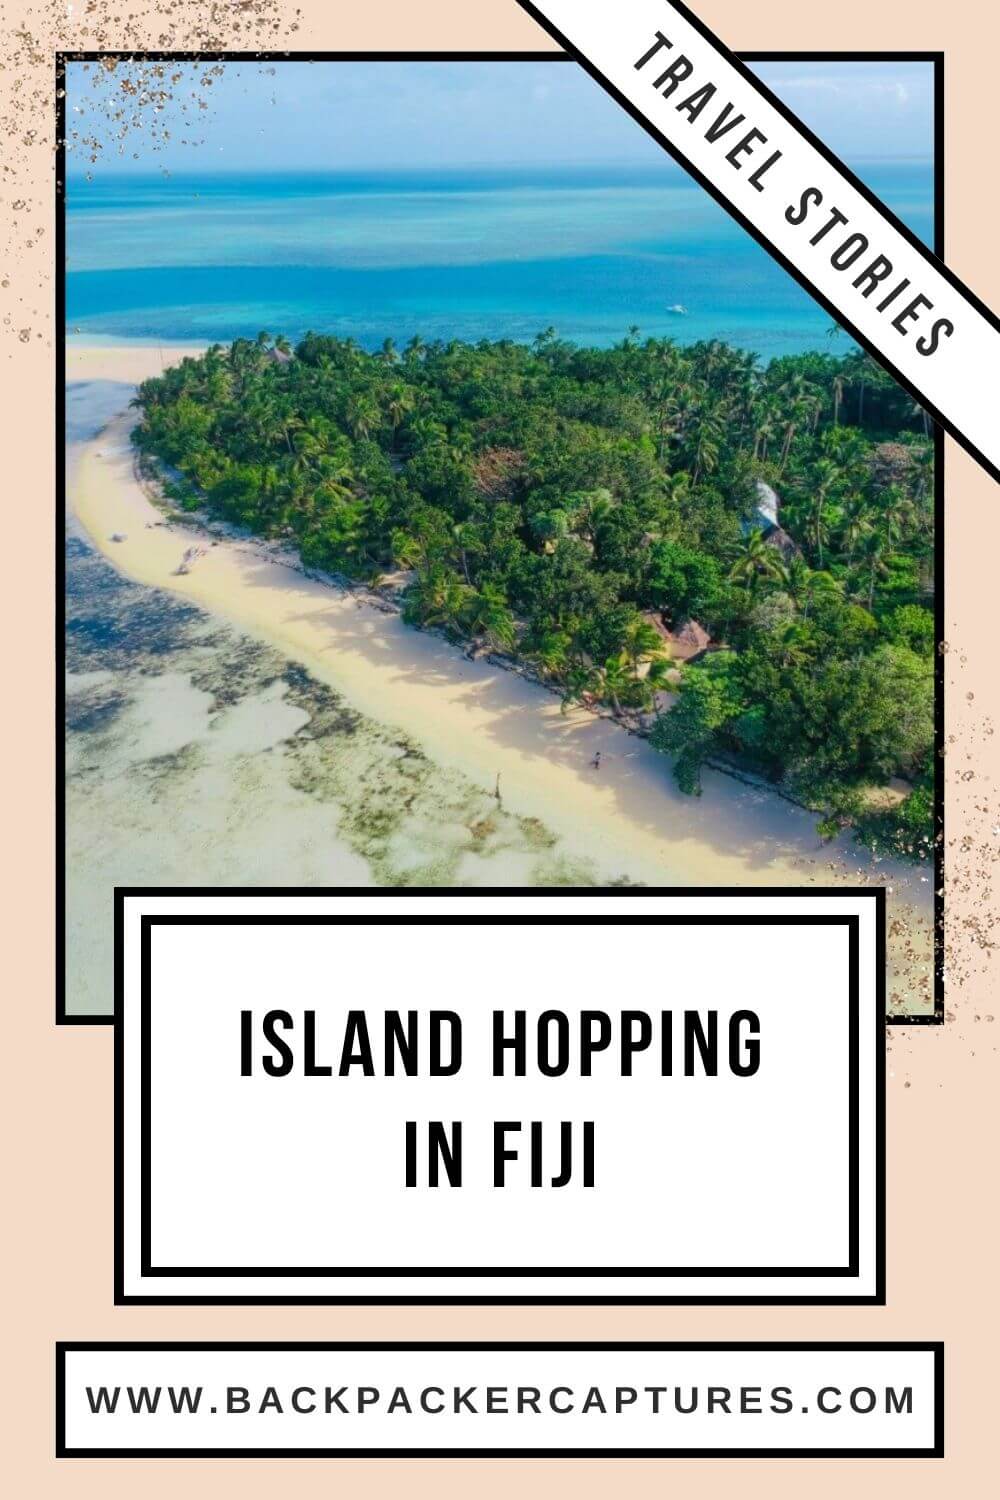 Island Hopping in Fiji